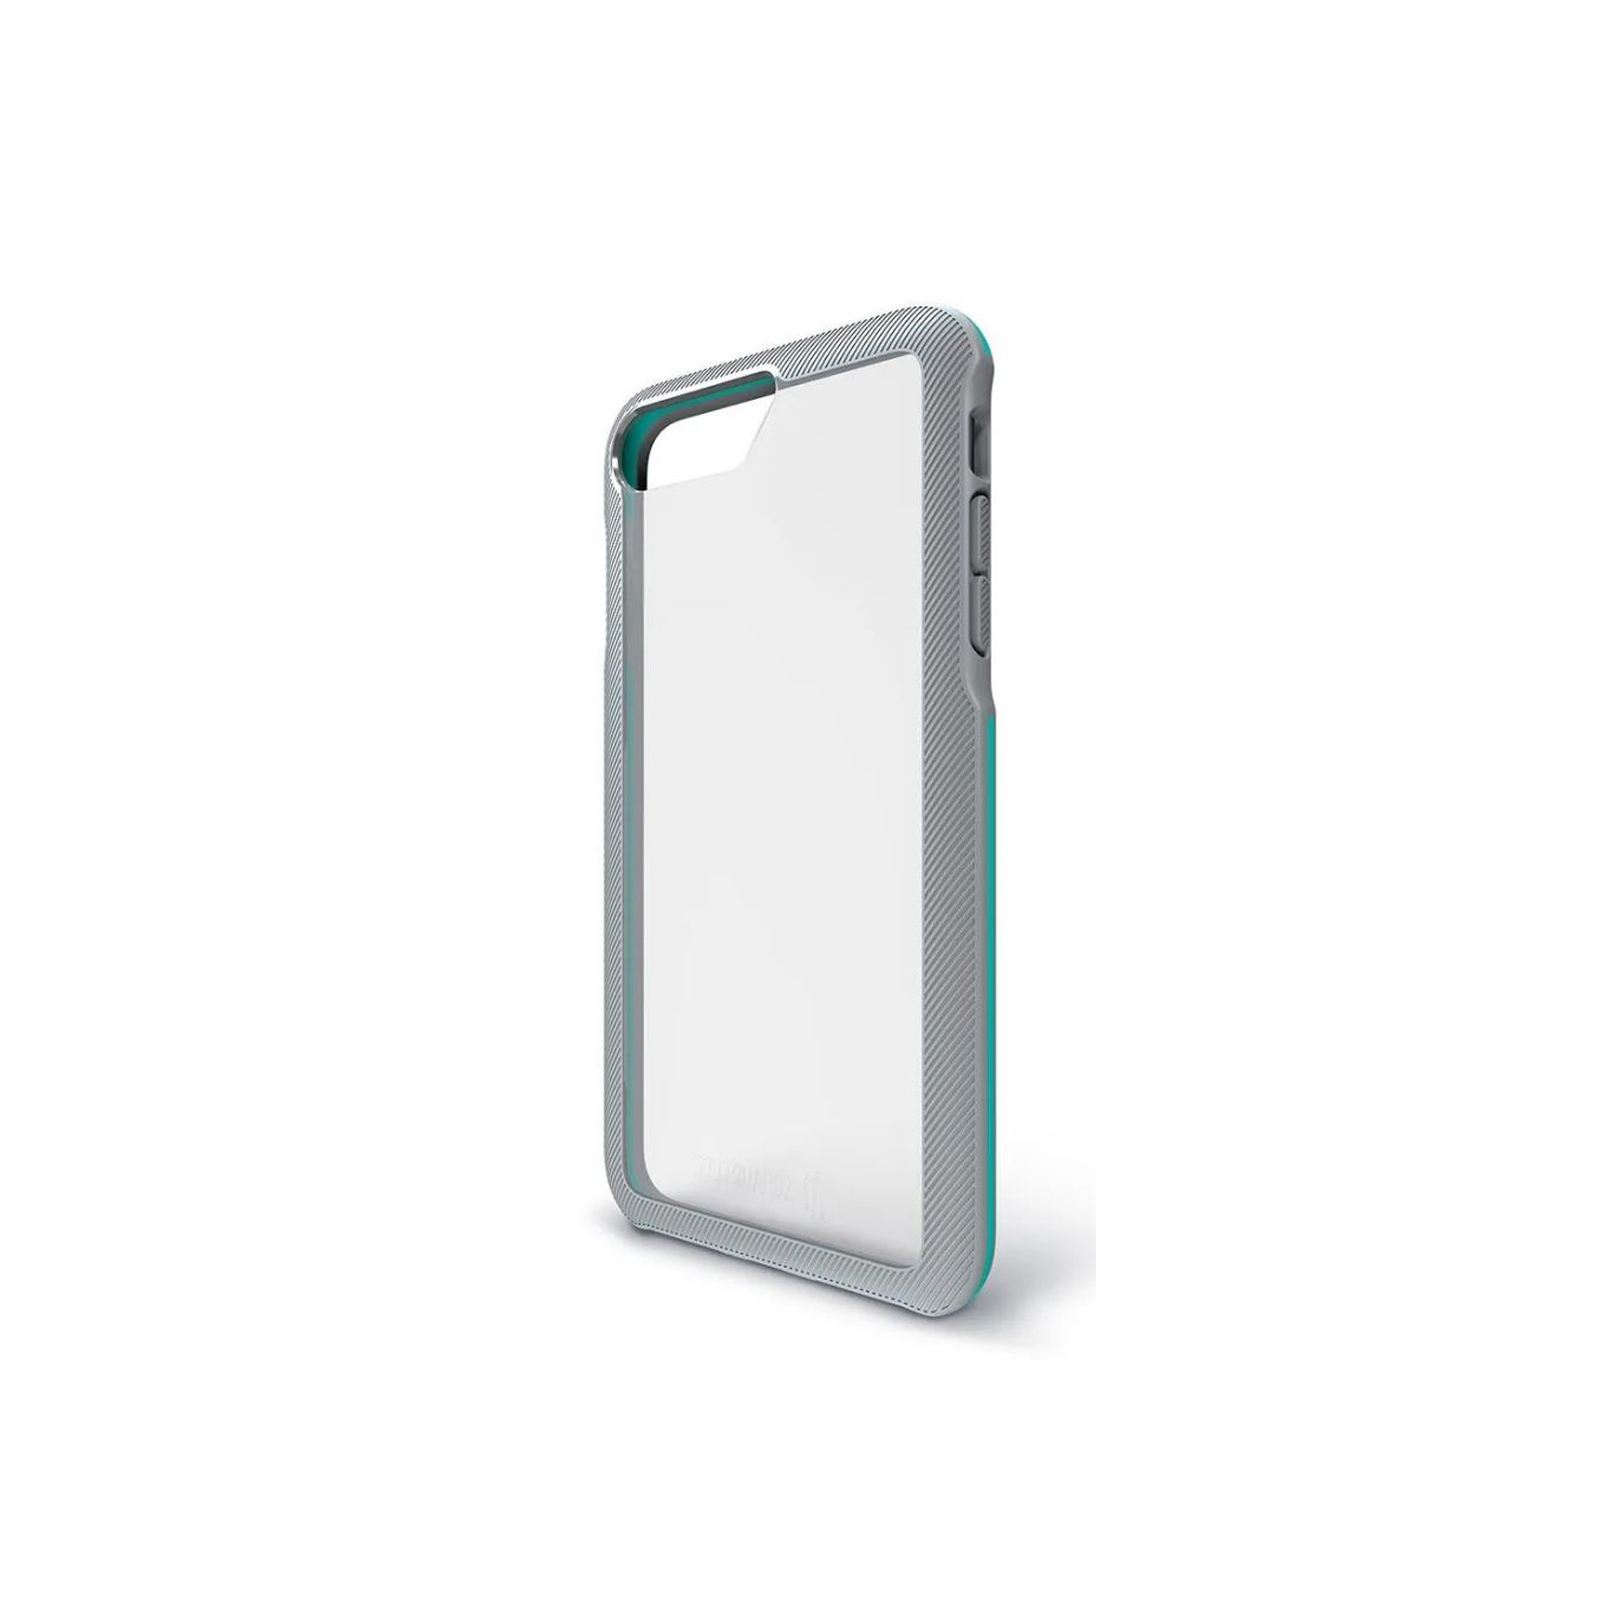 Trainr iPhone 6 Plus / 7 Plus / 8 Plus Case [Gray / Mint]